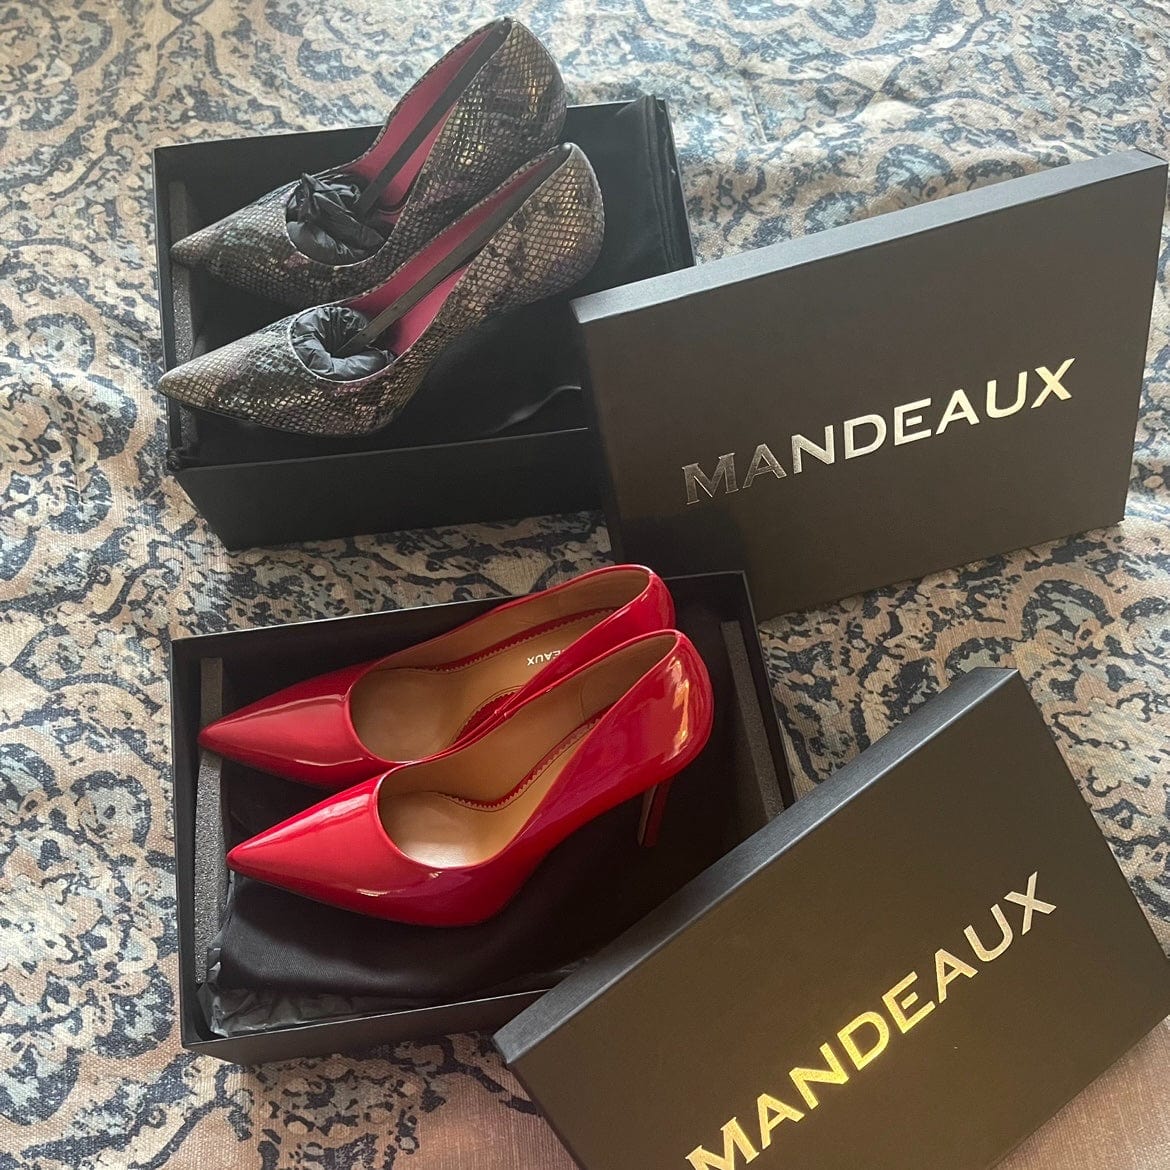 
                  
                    Custom Mandeaux® Heels - Mandeaux® Mandeaux® Customize Women’s Heels 3 inch 4 inch stiletto luxury Black Owned Anchorage Alaska
                  
                